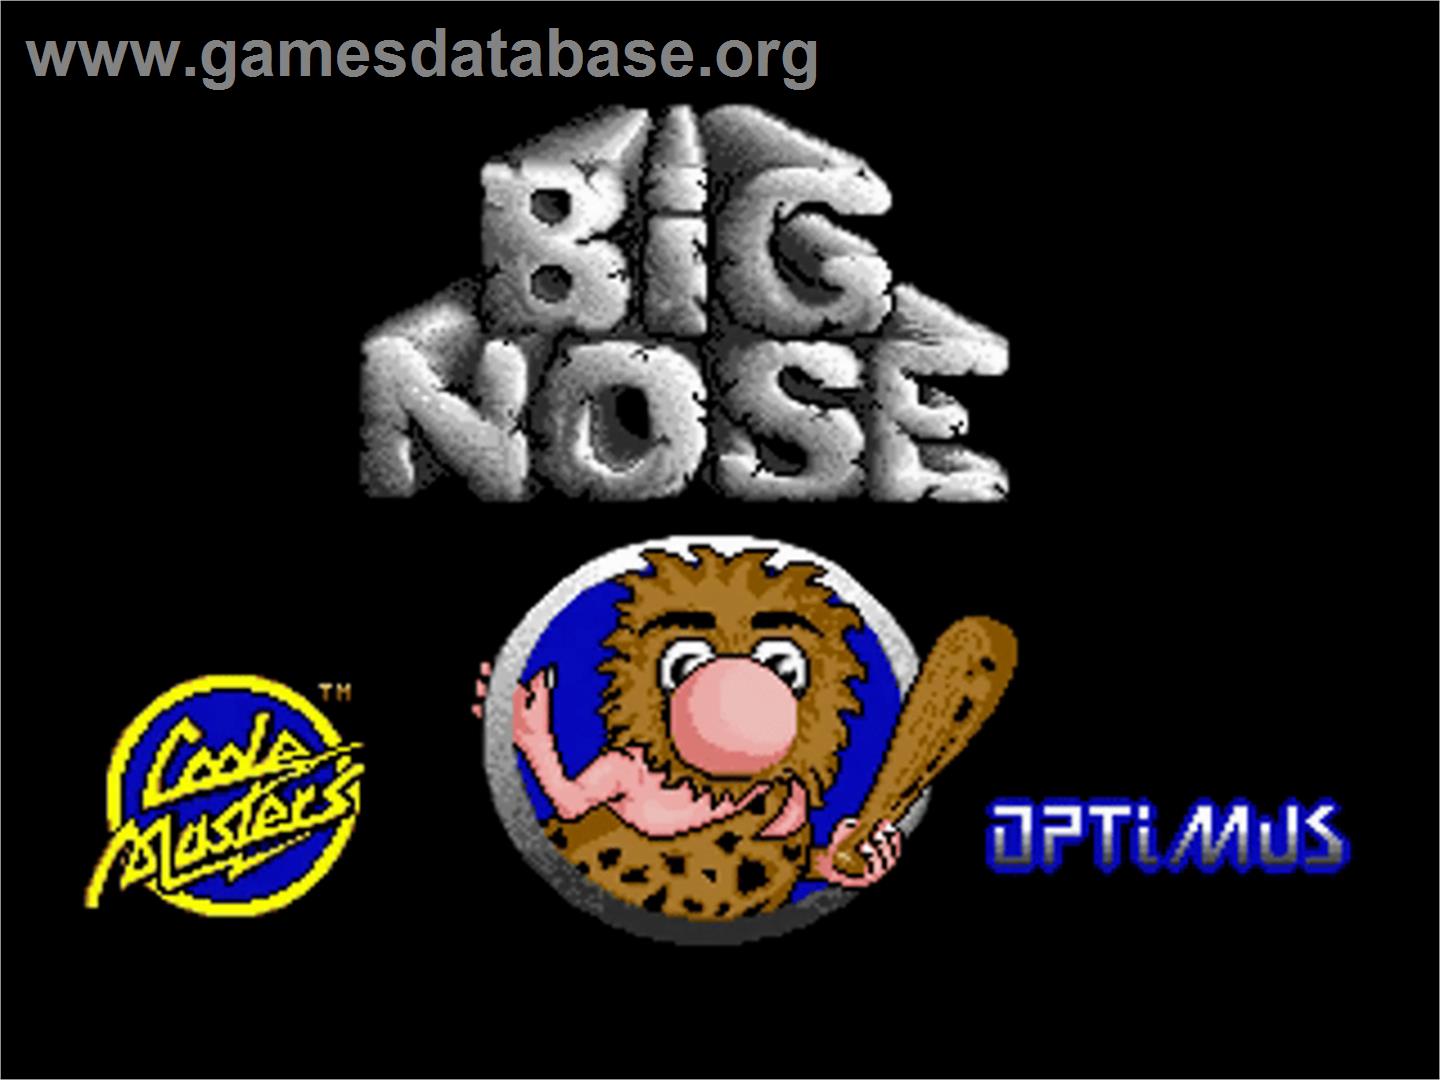 Big Nose the Caveman - Commodore Amiga - Artwork - Title Screen